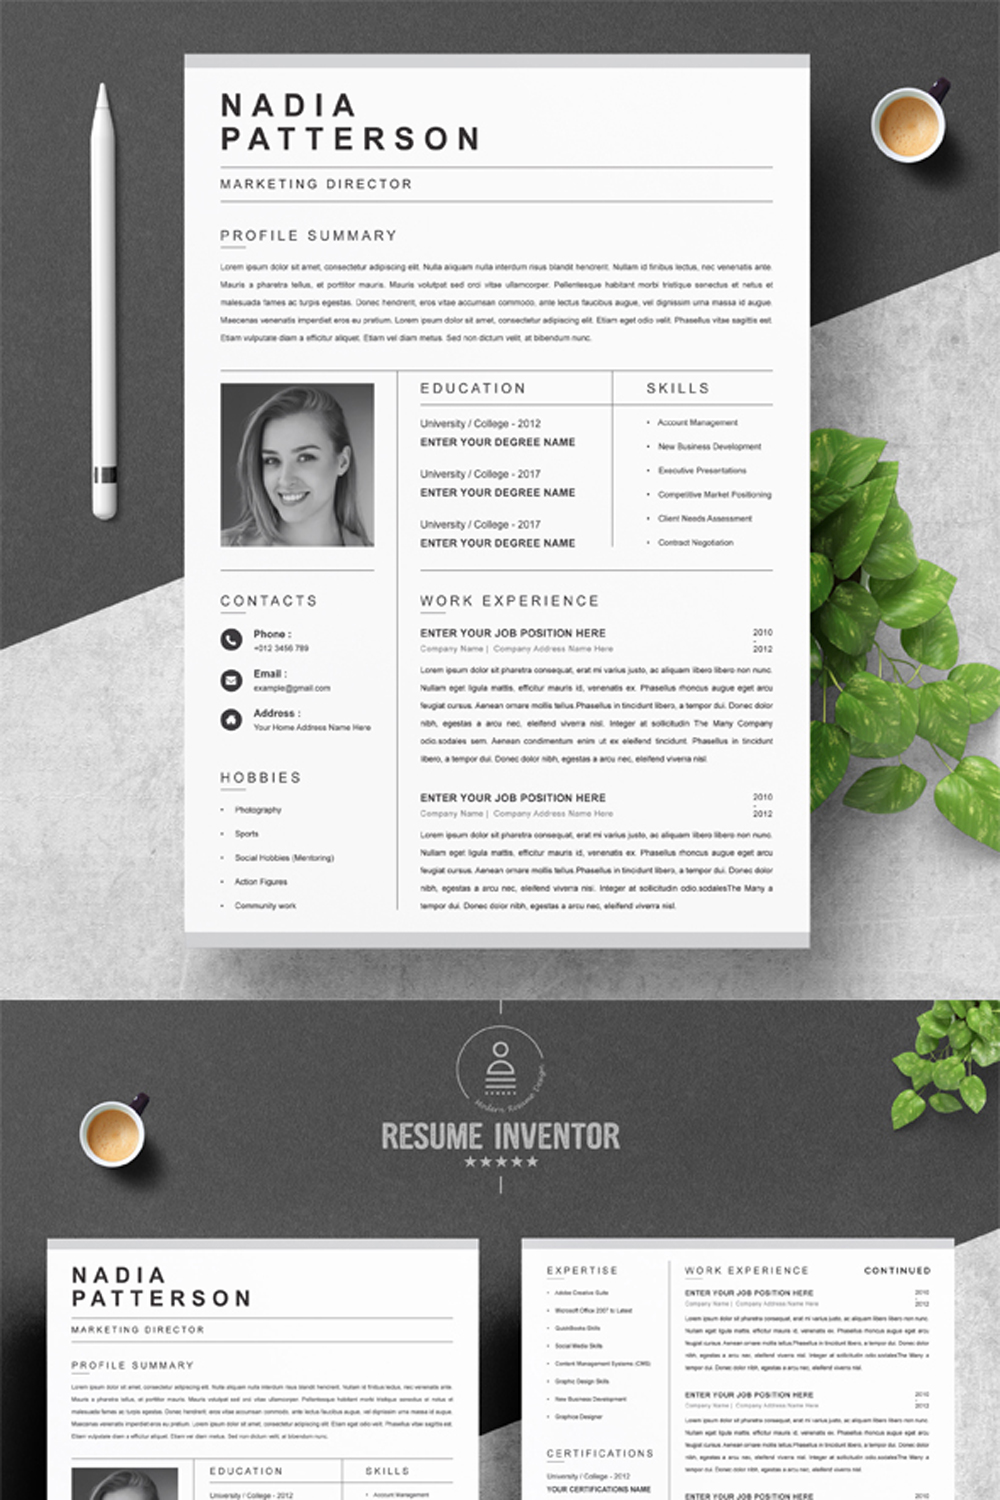 Marketing Director CV Template | Professional Resume | CV Template pinterest preview image.